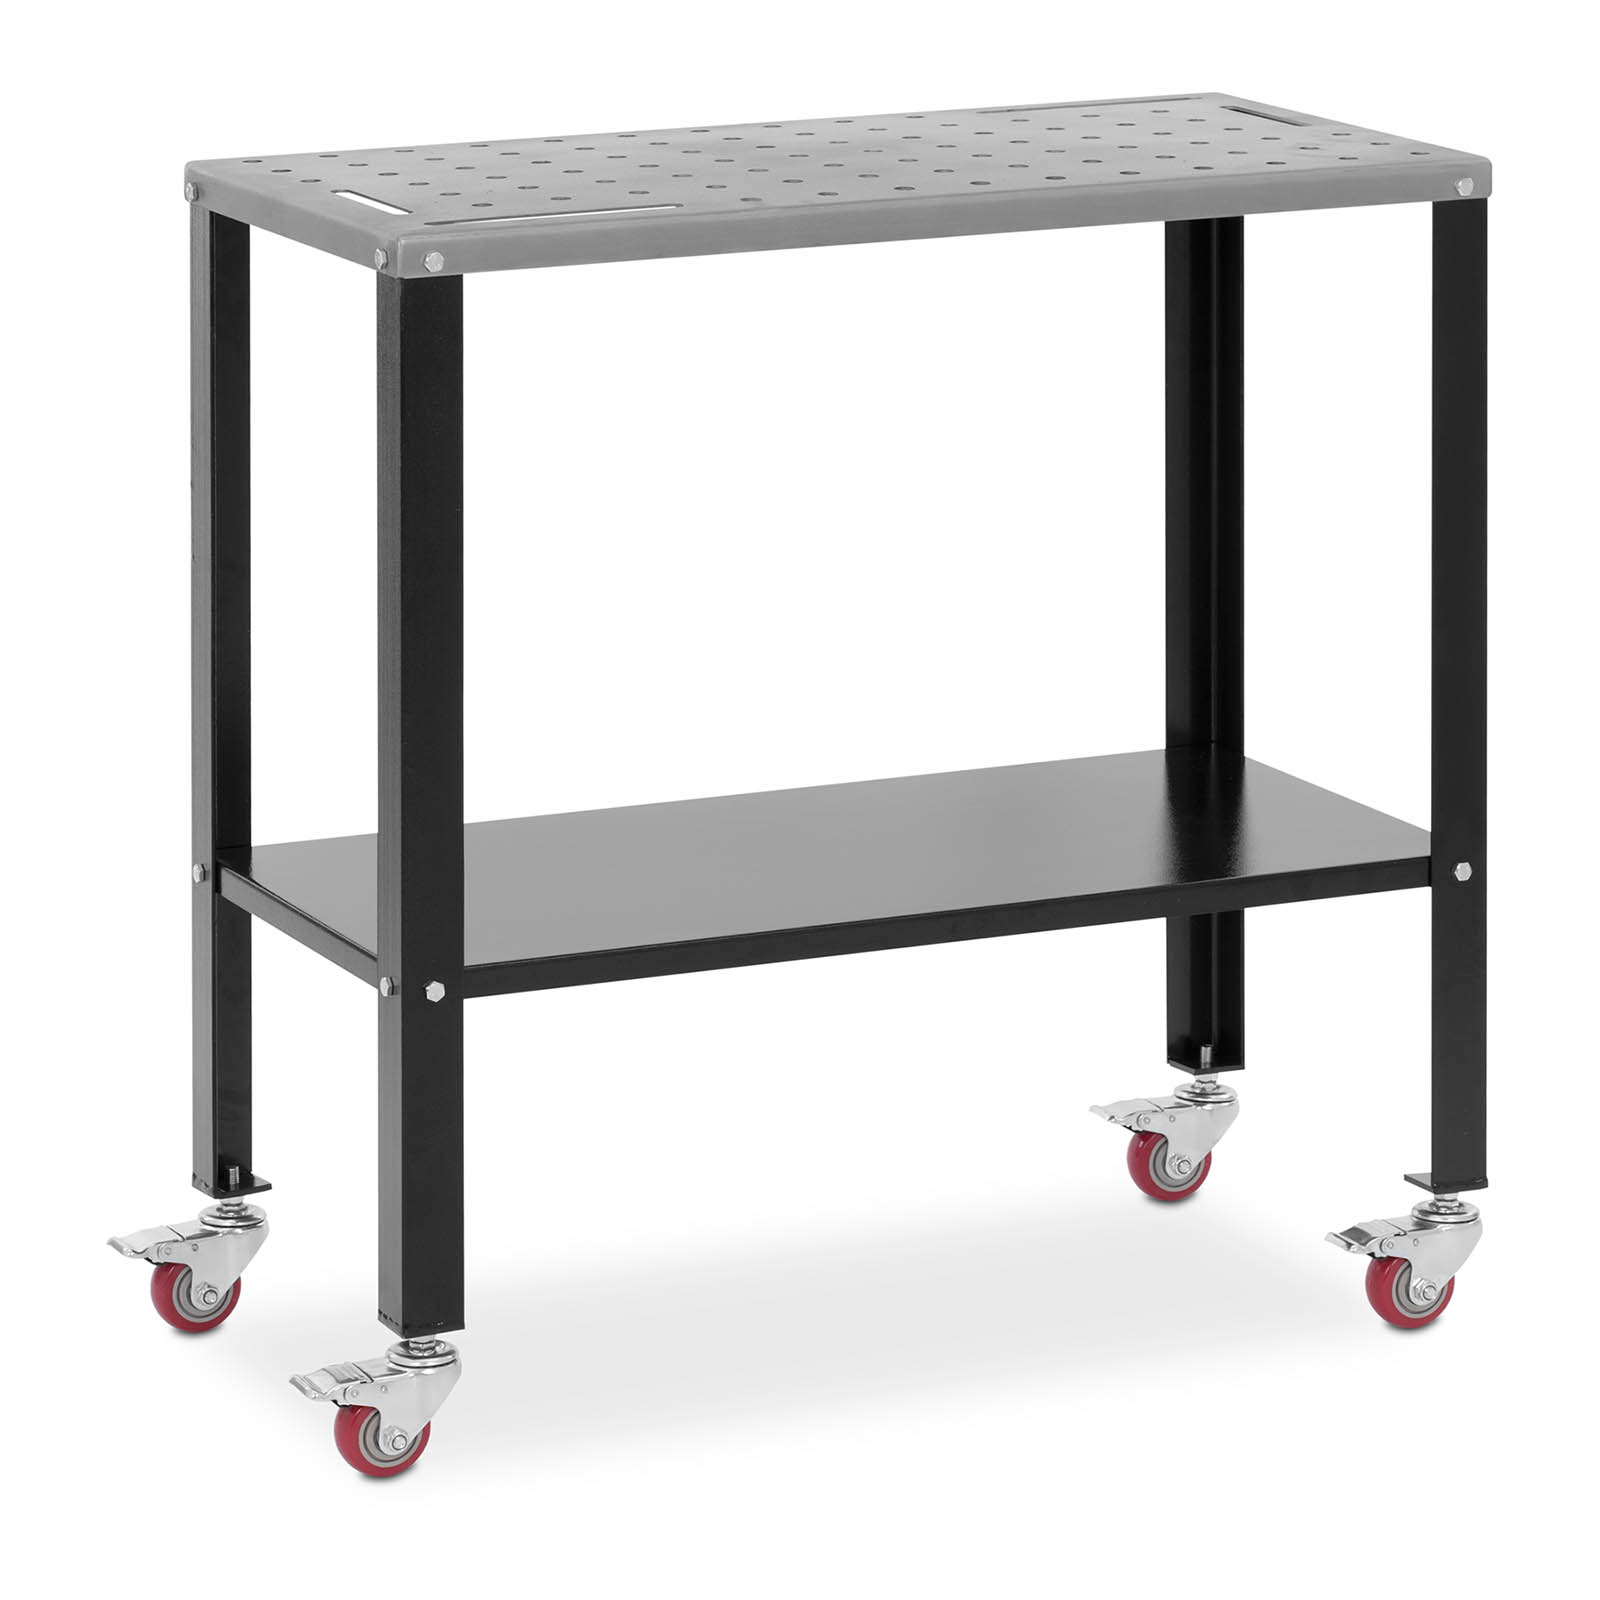 Svetsbord med hjul - 544 kg - 91,3 x 46 cm